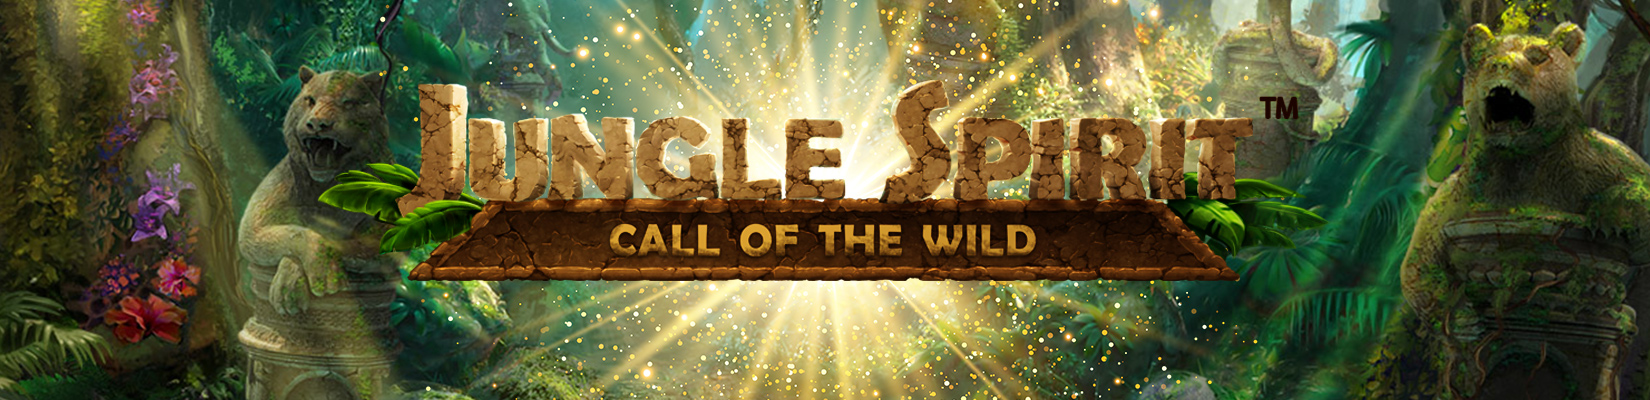 NetEnt release – Jungle Spirit: Call of the Wild ™